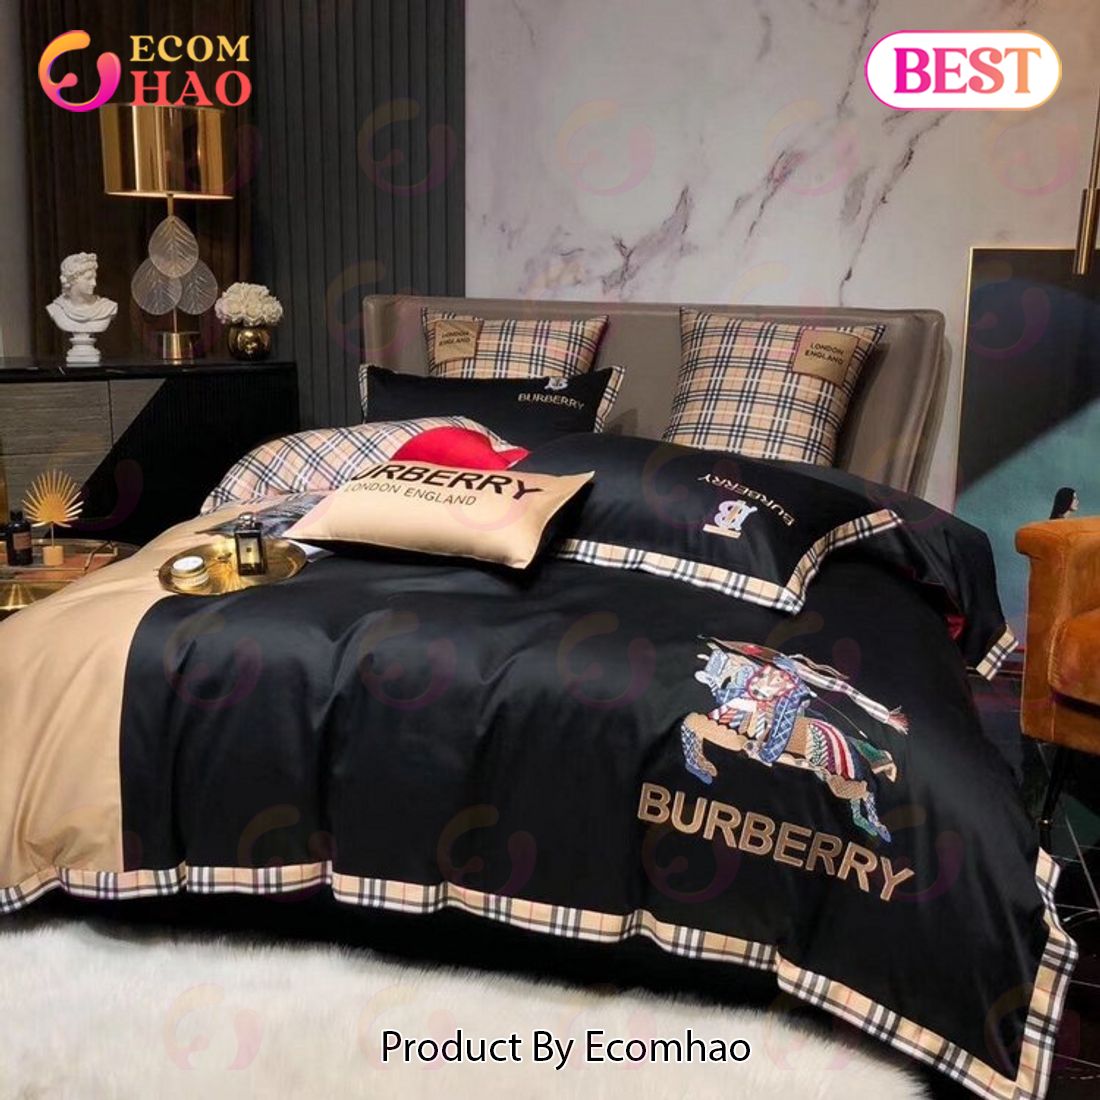 Burberry Black Luxury Fashion Brand Bedding Sets